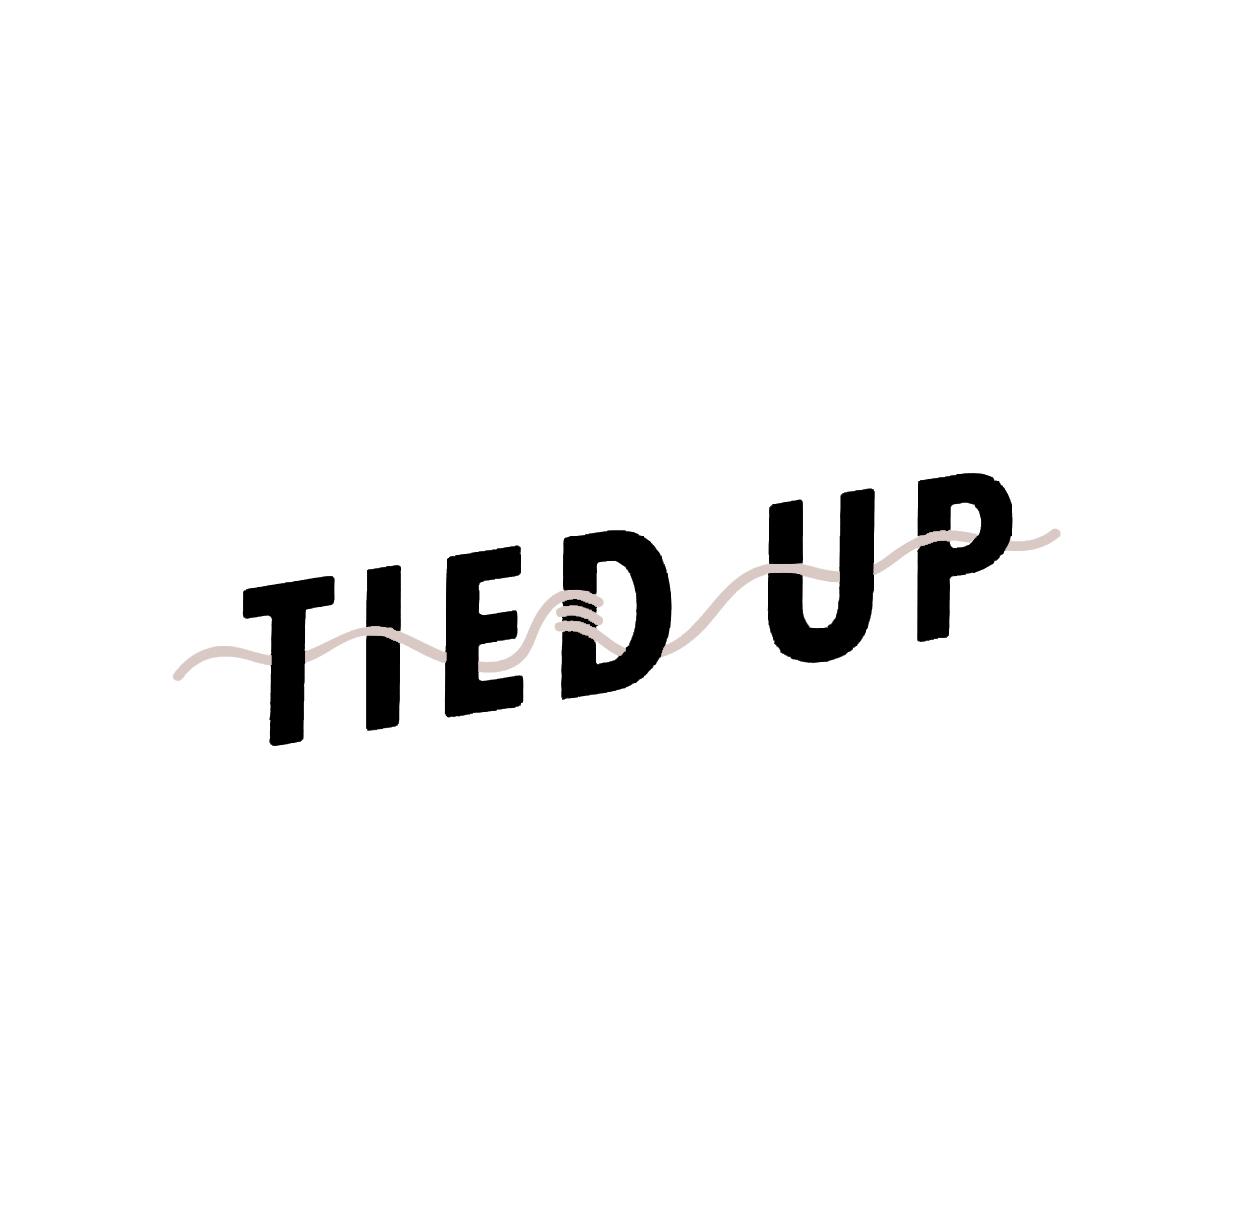 TIED UP登山绳商标转让费用买卖交易流程